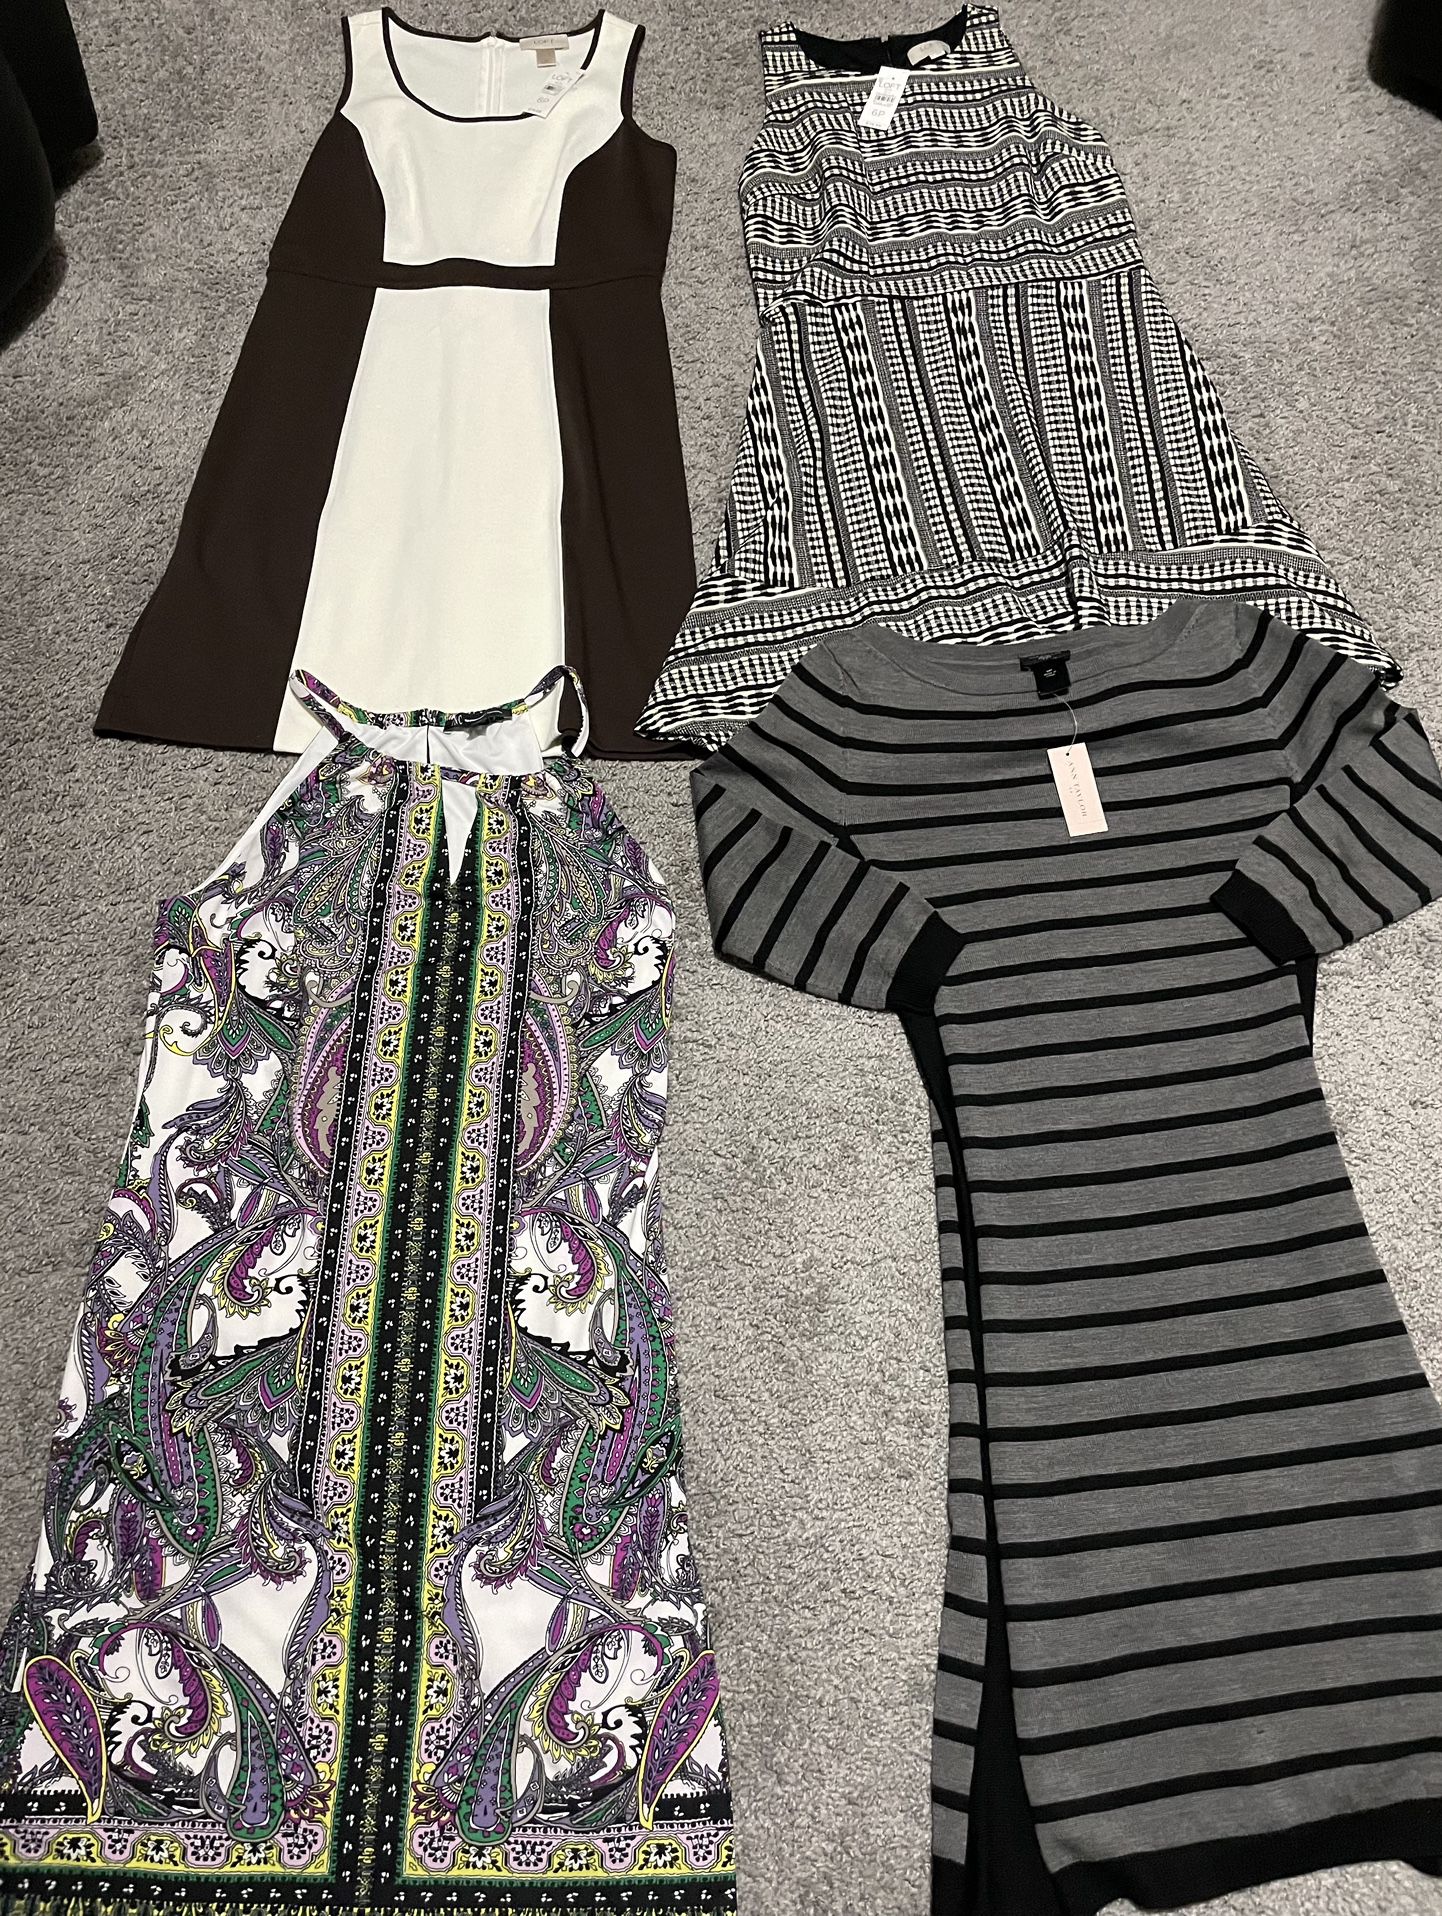 Women’s Loft/AnnTaylor & I.N.C. Dresses (priced separately)